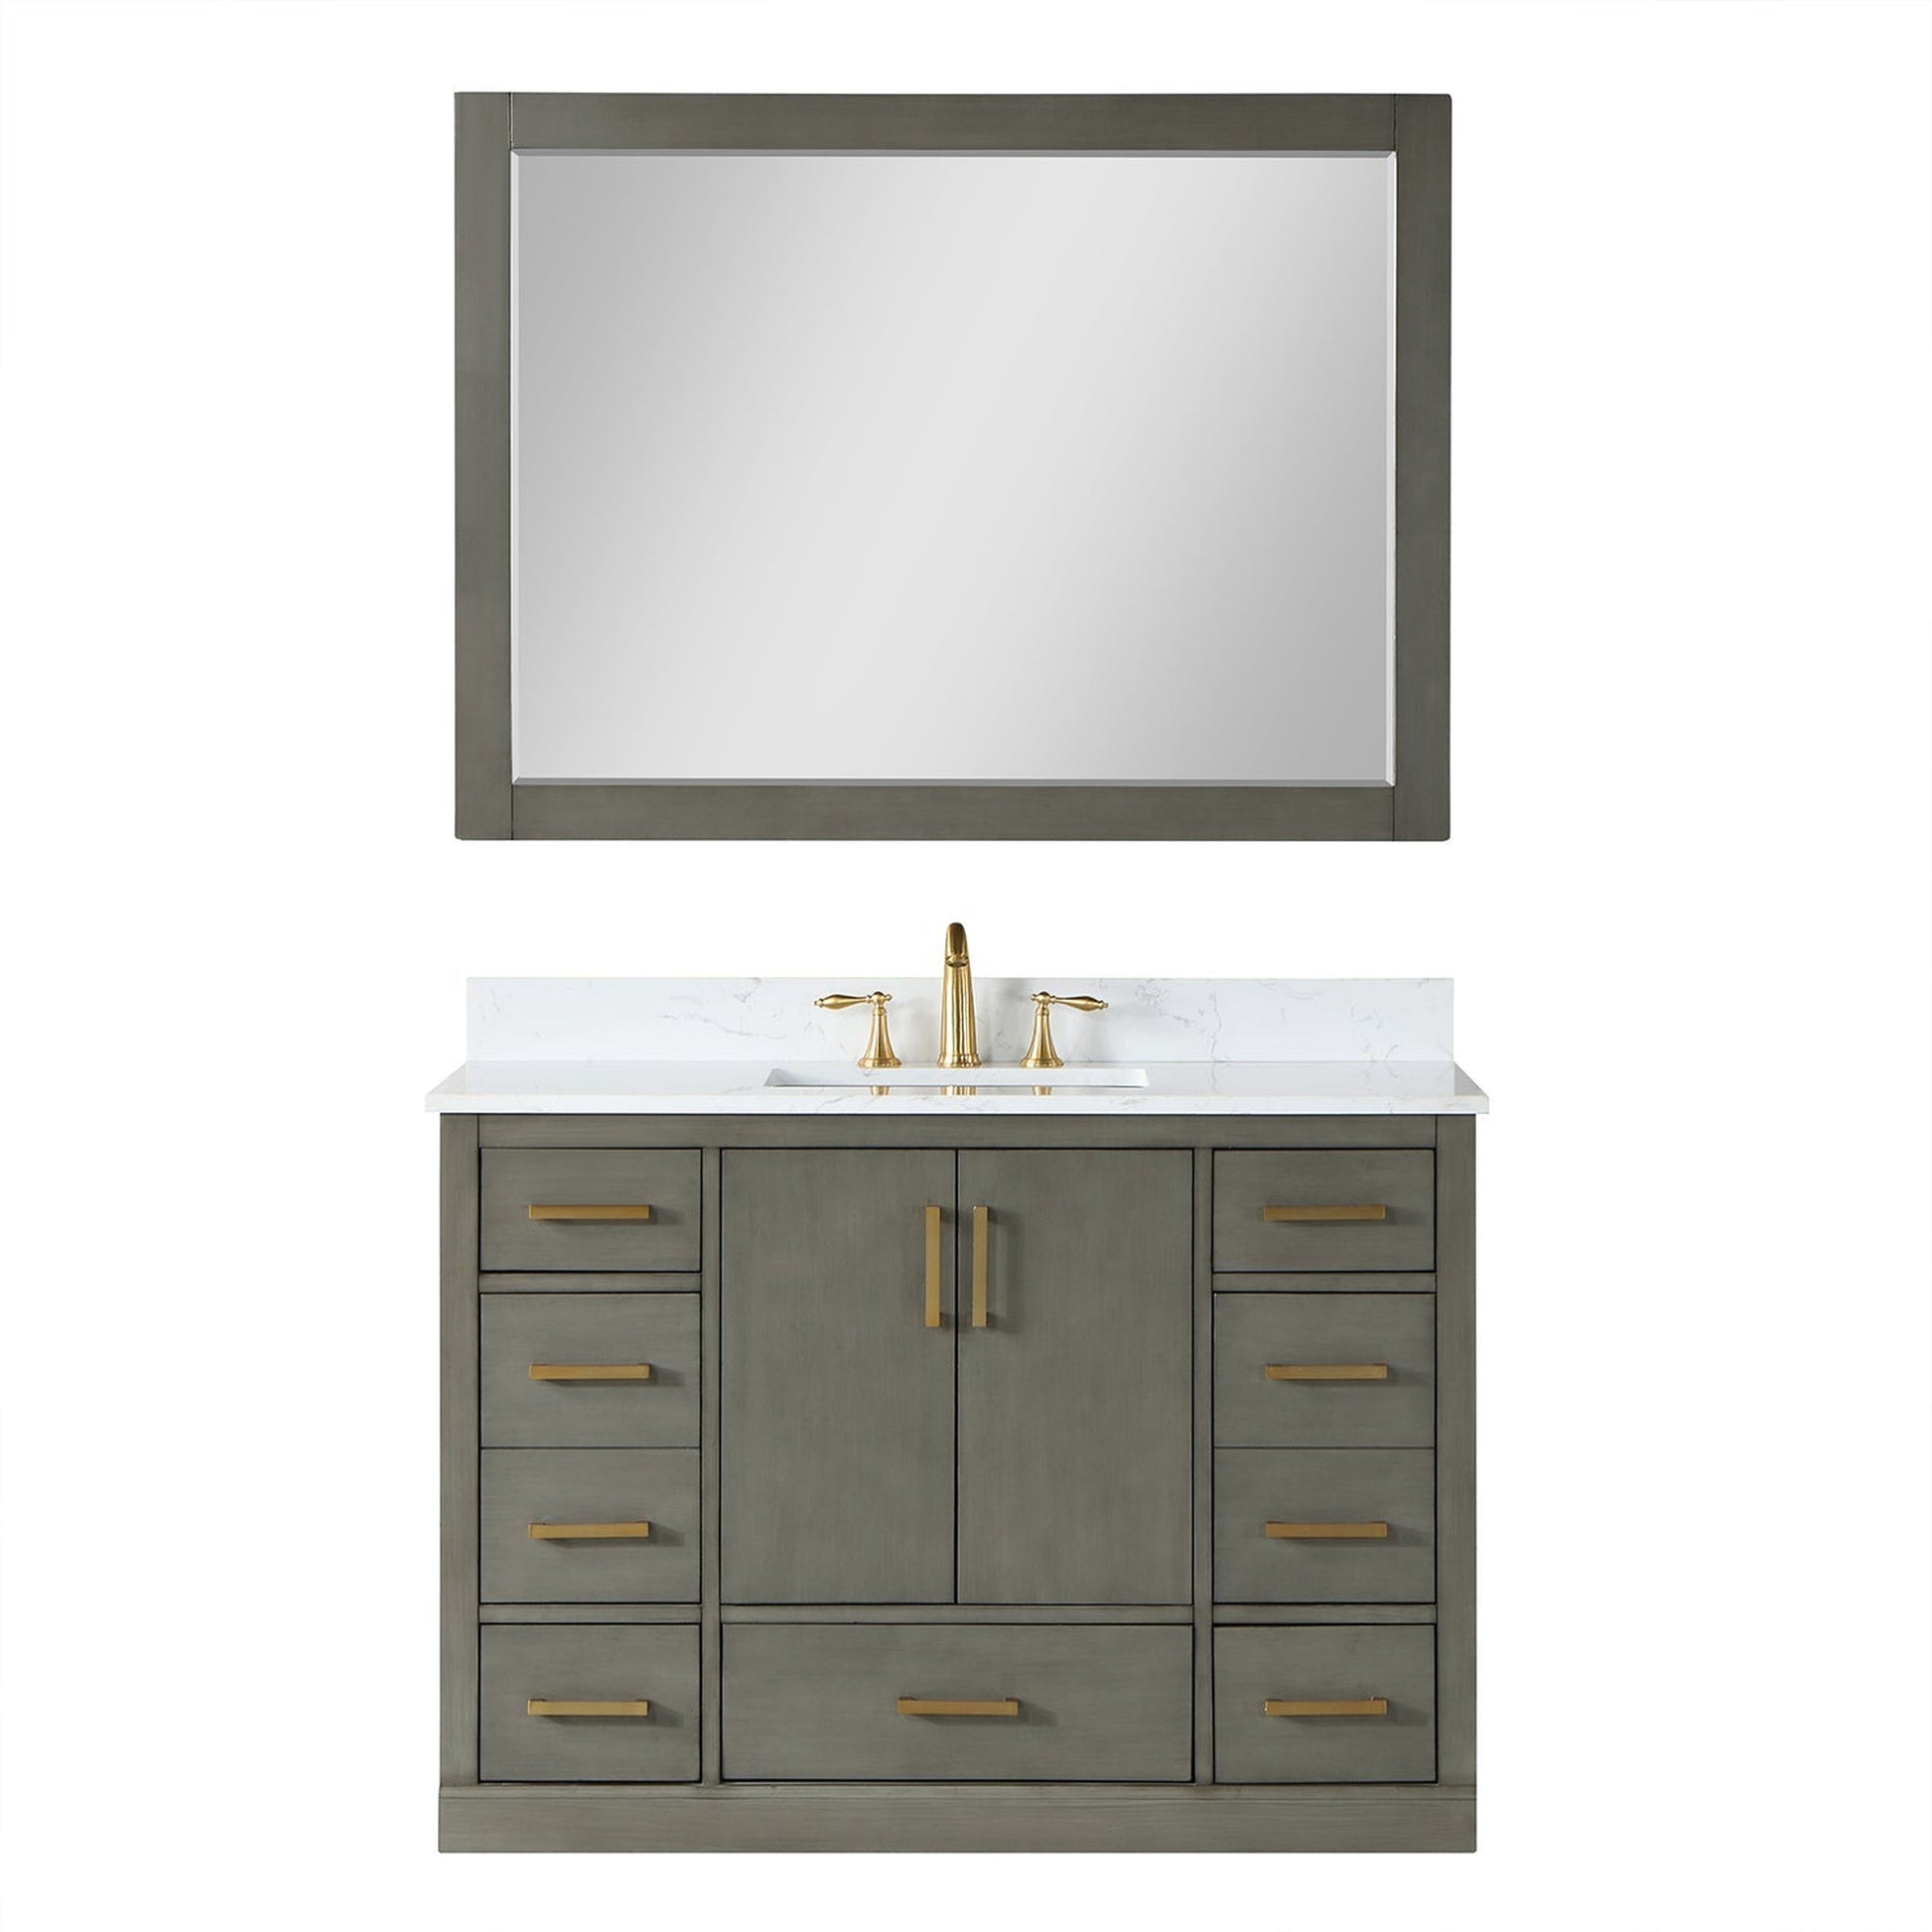 Altair Monna 48" Gray Pine Freestanding Single Bathroom Vanity Set With Mirror, Aosta White Composite Stone Top, Rectangular Undermount Ceramic Sink, Overflow, and Backsplash